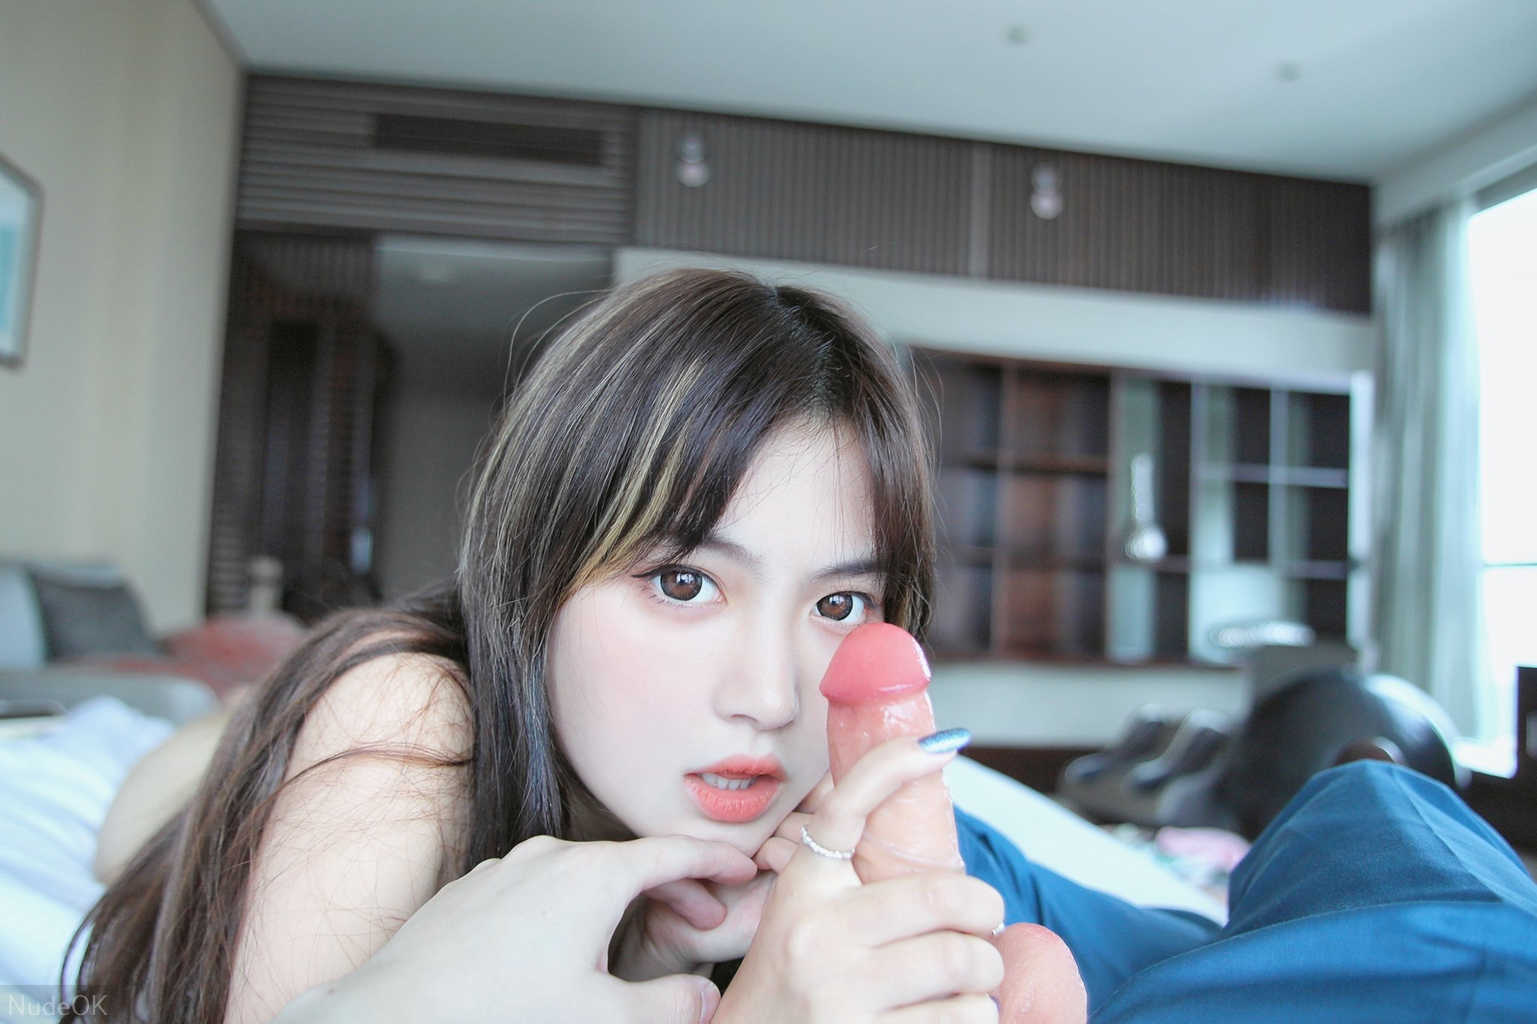 NudeOK Idol girl Korea Pictures k pop sexy nude model korean asia; 